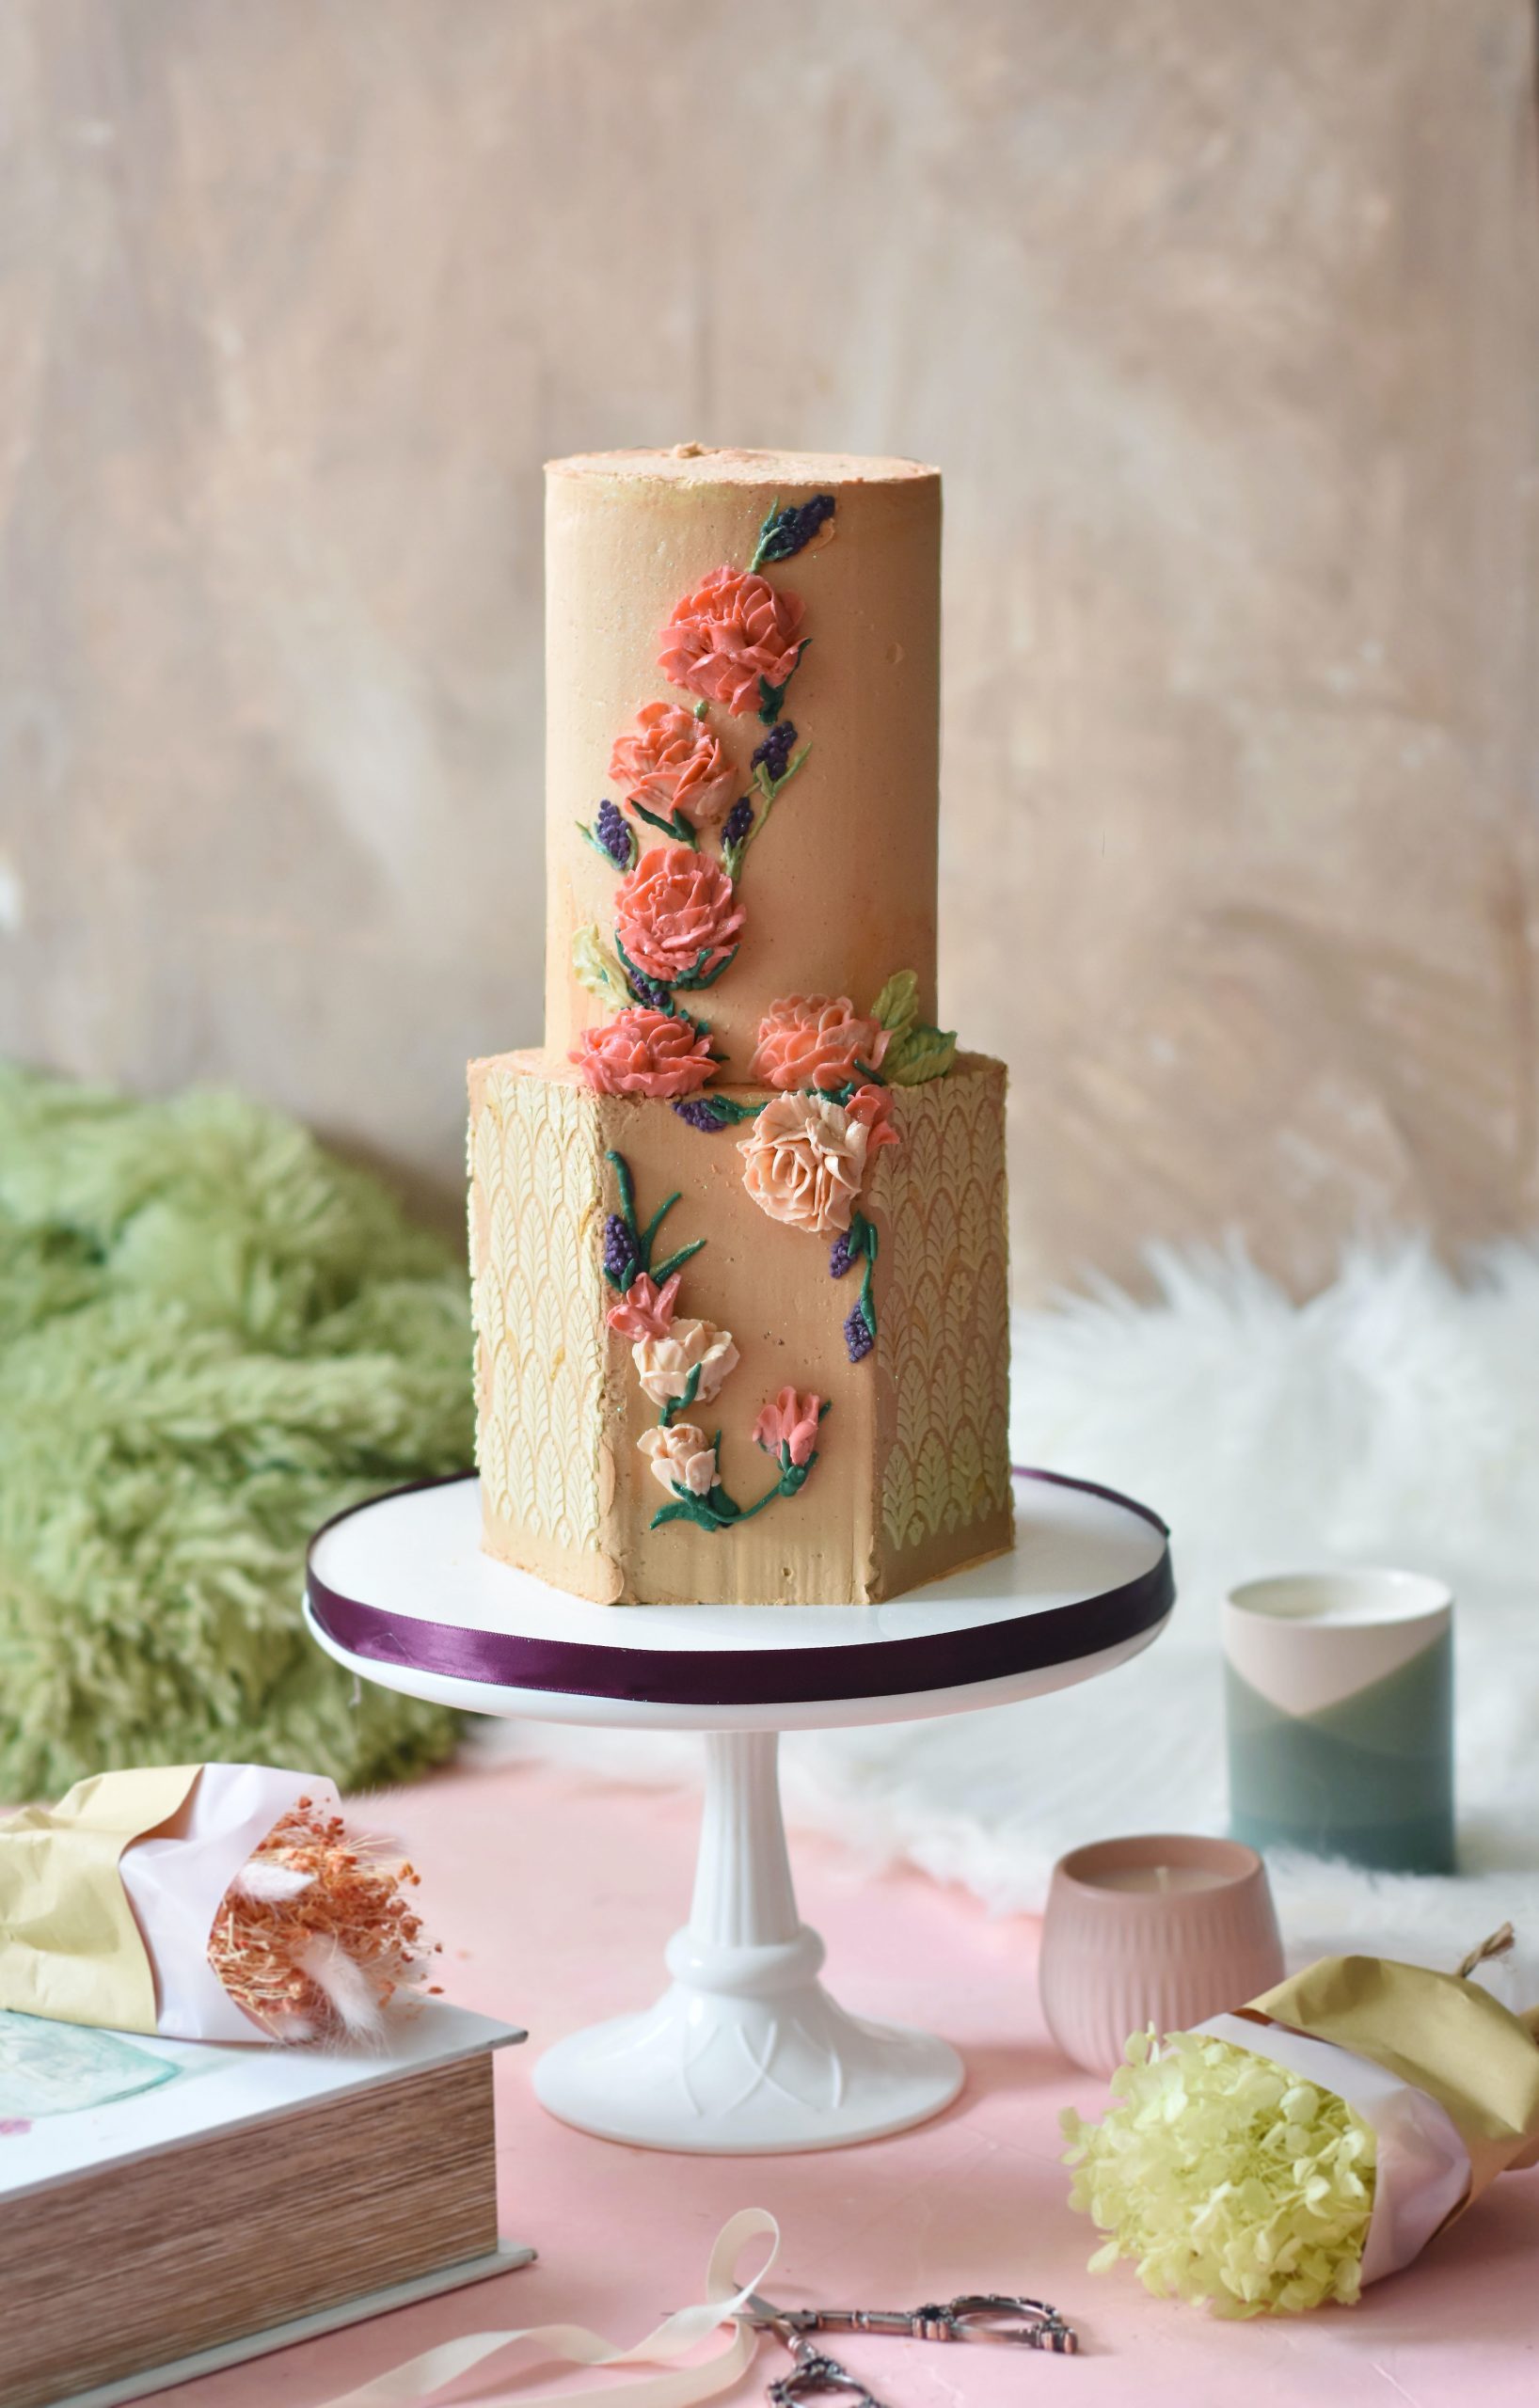 Scaling Your Ingredients - Sugar Arts Institute: Cake Decorating